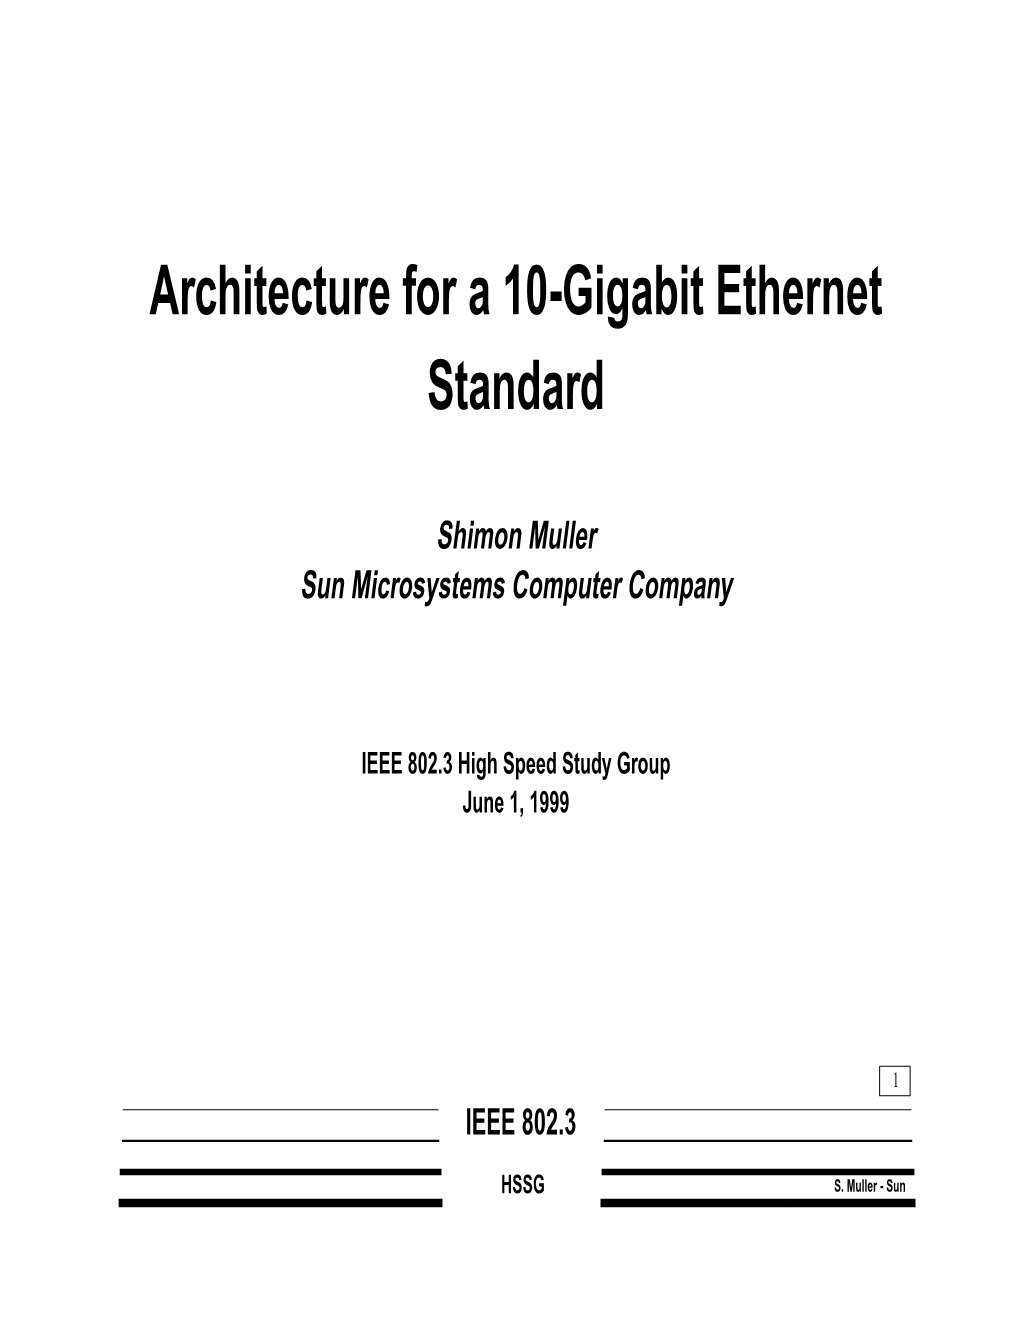 Architecture for a 10-Gigabit Ethernet Standard